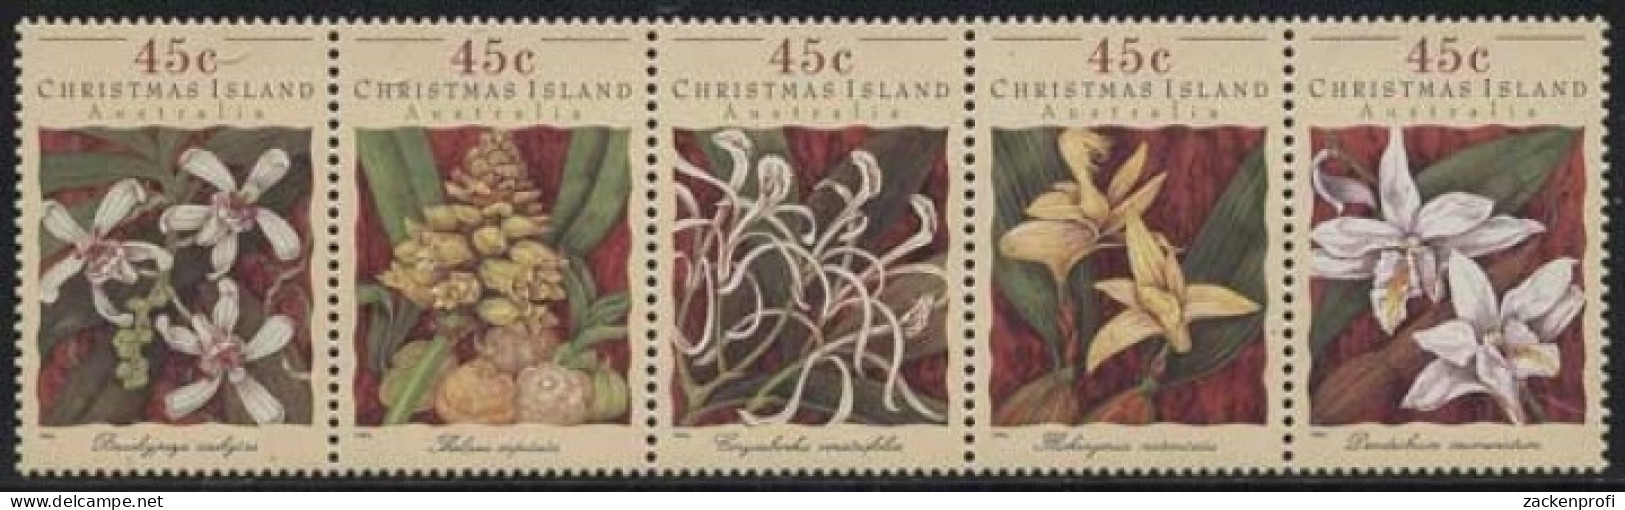 Weihnachts-Insel 1994 Orchideen 397/01 ZD Postfrisch (C25491) - Christmaseiland